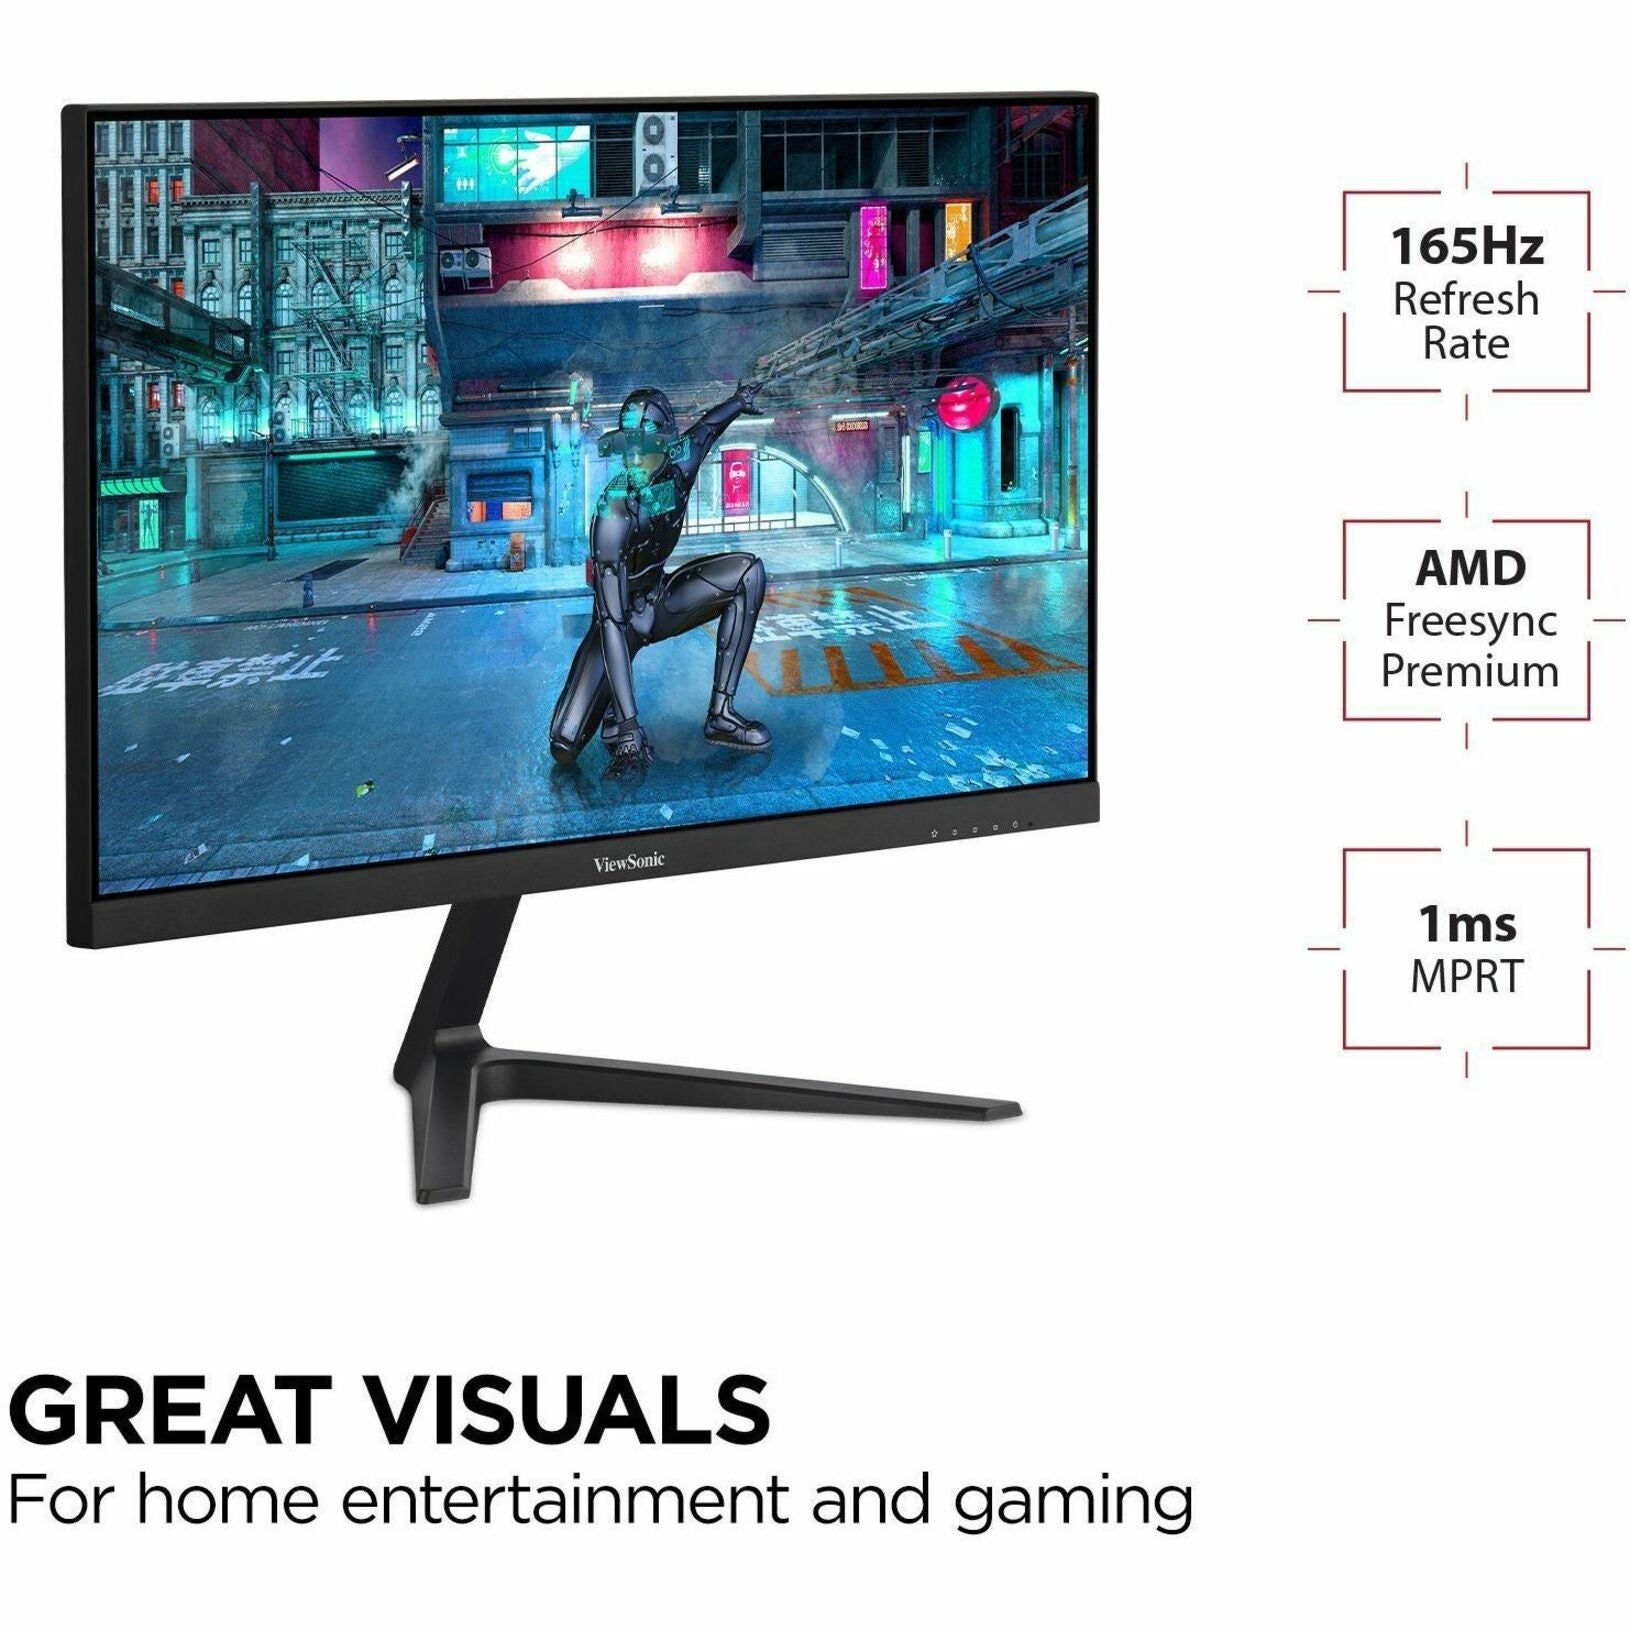 ViewSonic VX2418-P-MHD Gaming LCD Monitor, 24" 165Hz Full HD, HDMI DP, 2x2W Speakers, Tilt, VESA, 3 Years Warranty